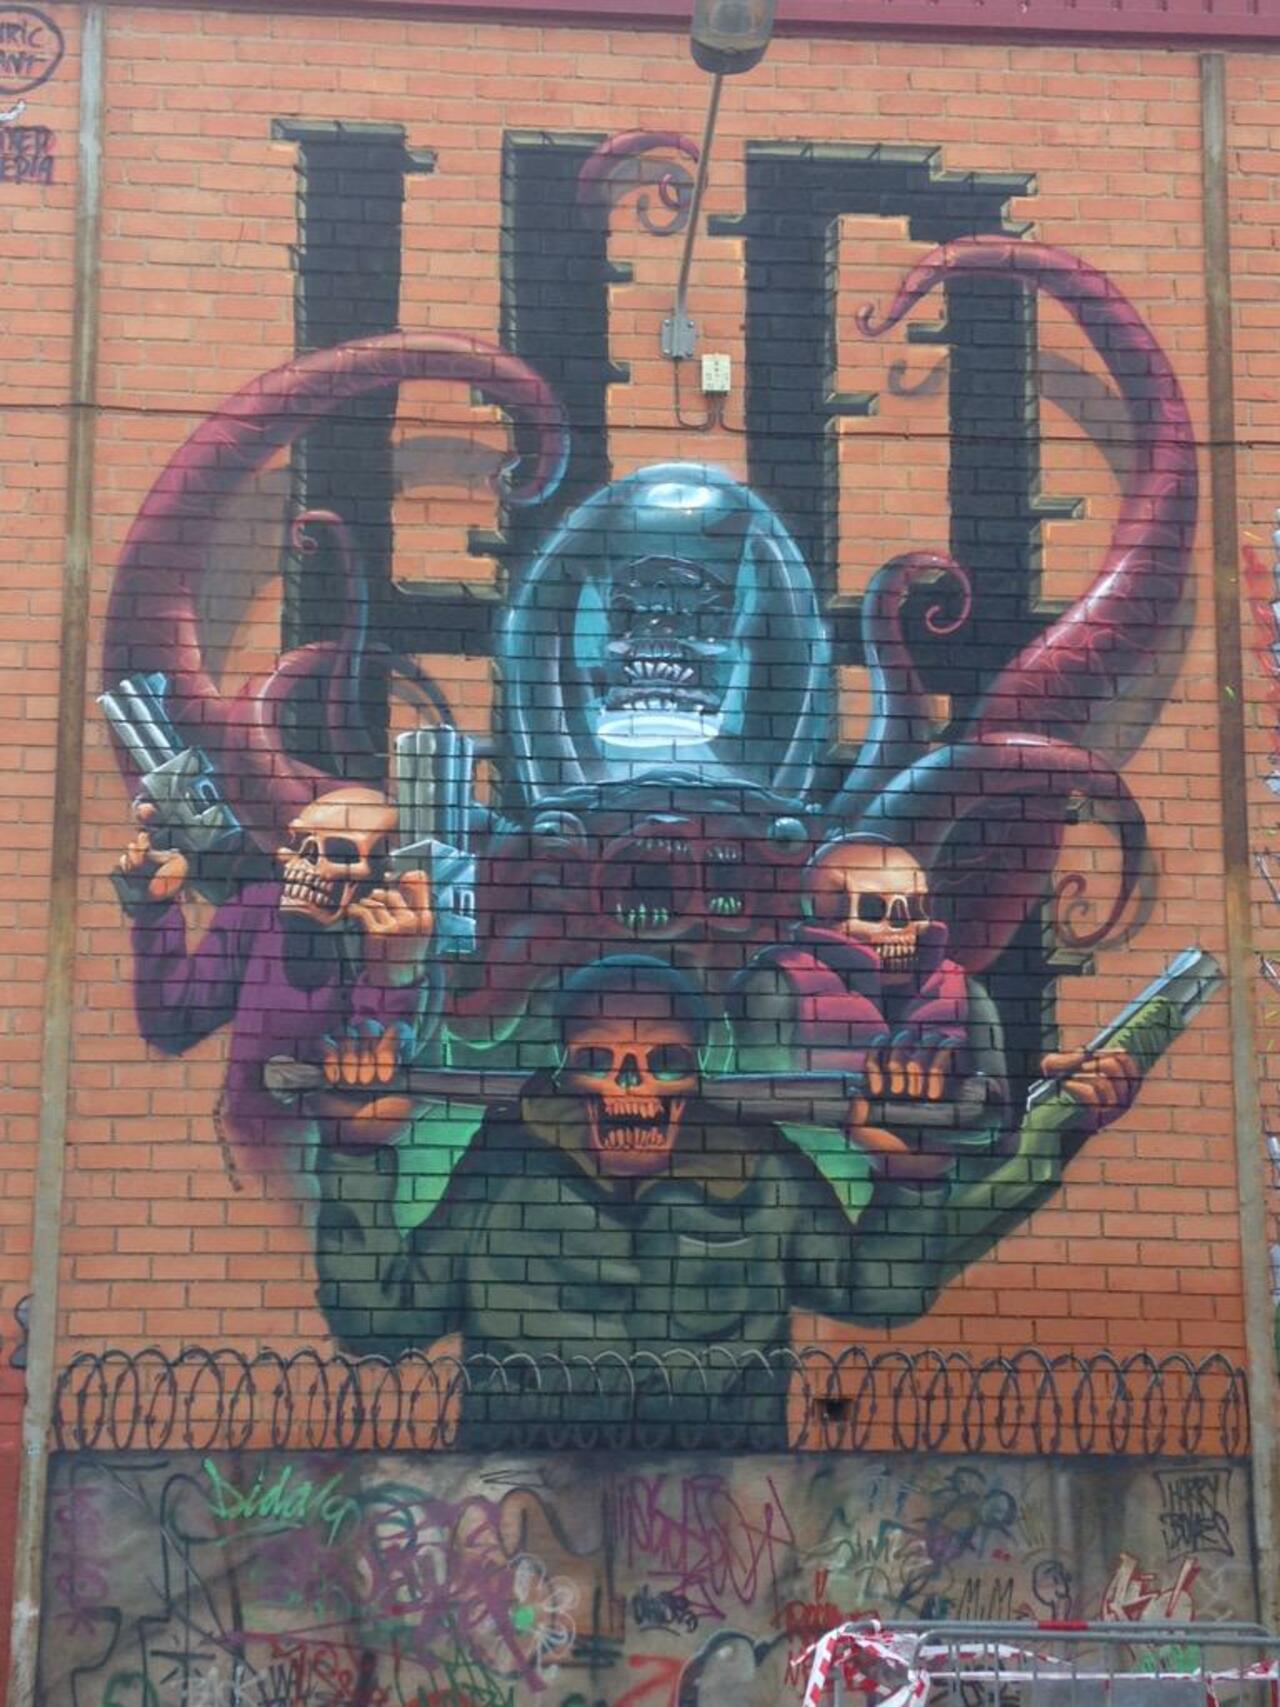 RT @ArtOnTheWalls: C/Doctor Mata, Sabadell, Catalunya. #IsArt? #NotArt #Graffiti #StreetArt #WallsSpeaks http://t.co/e5oKul7qJp